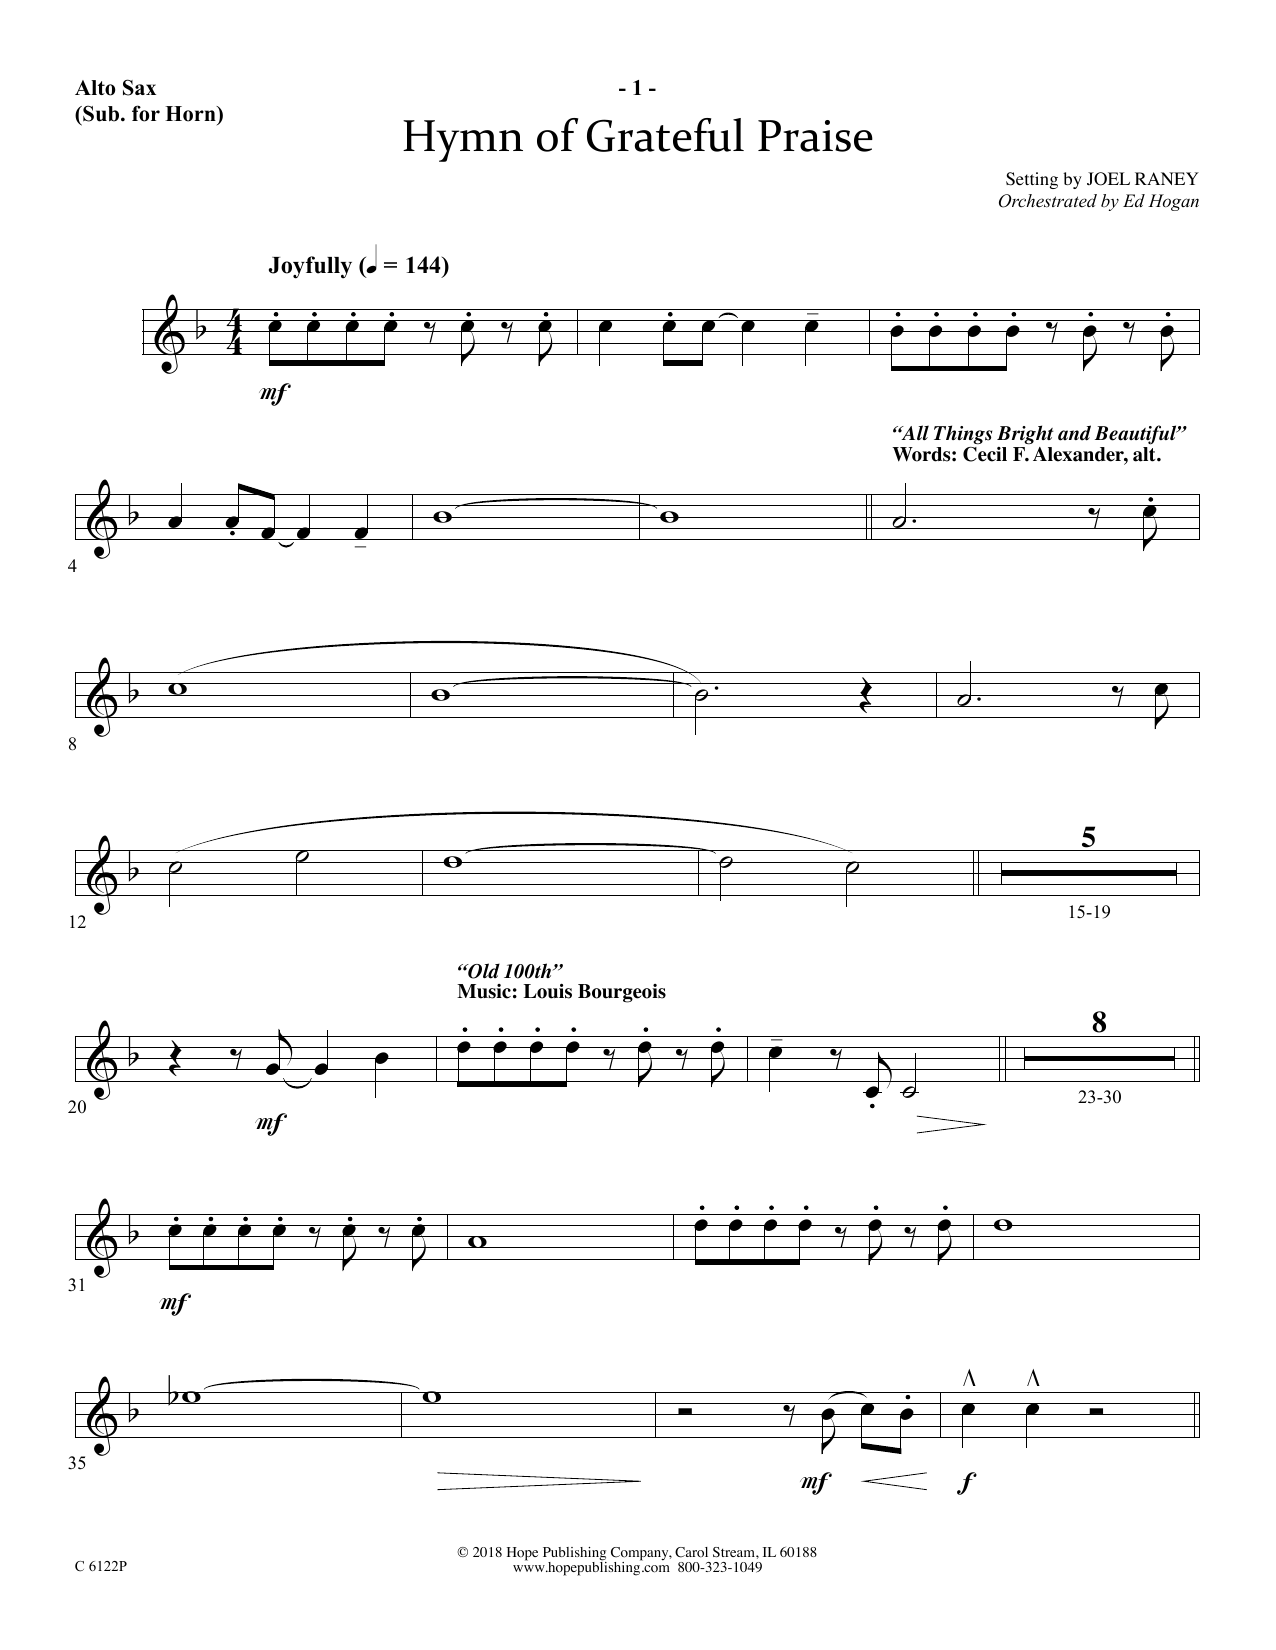 Joel Raney Hymn Of Grateful Praise - Alto Sax (Horn sub.) Sheet Music Notes & Chords for Choir Instrumental Pak - Download or Print PDF